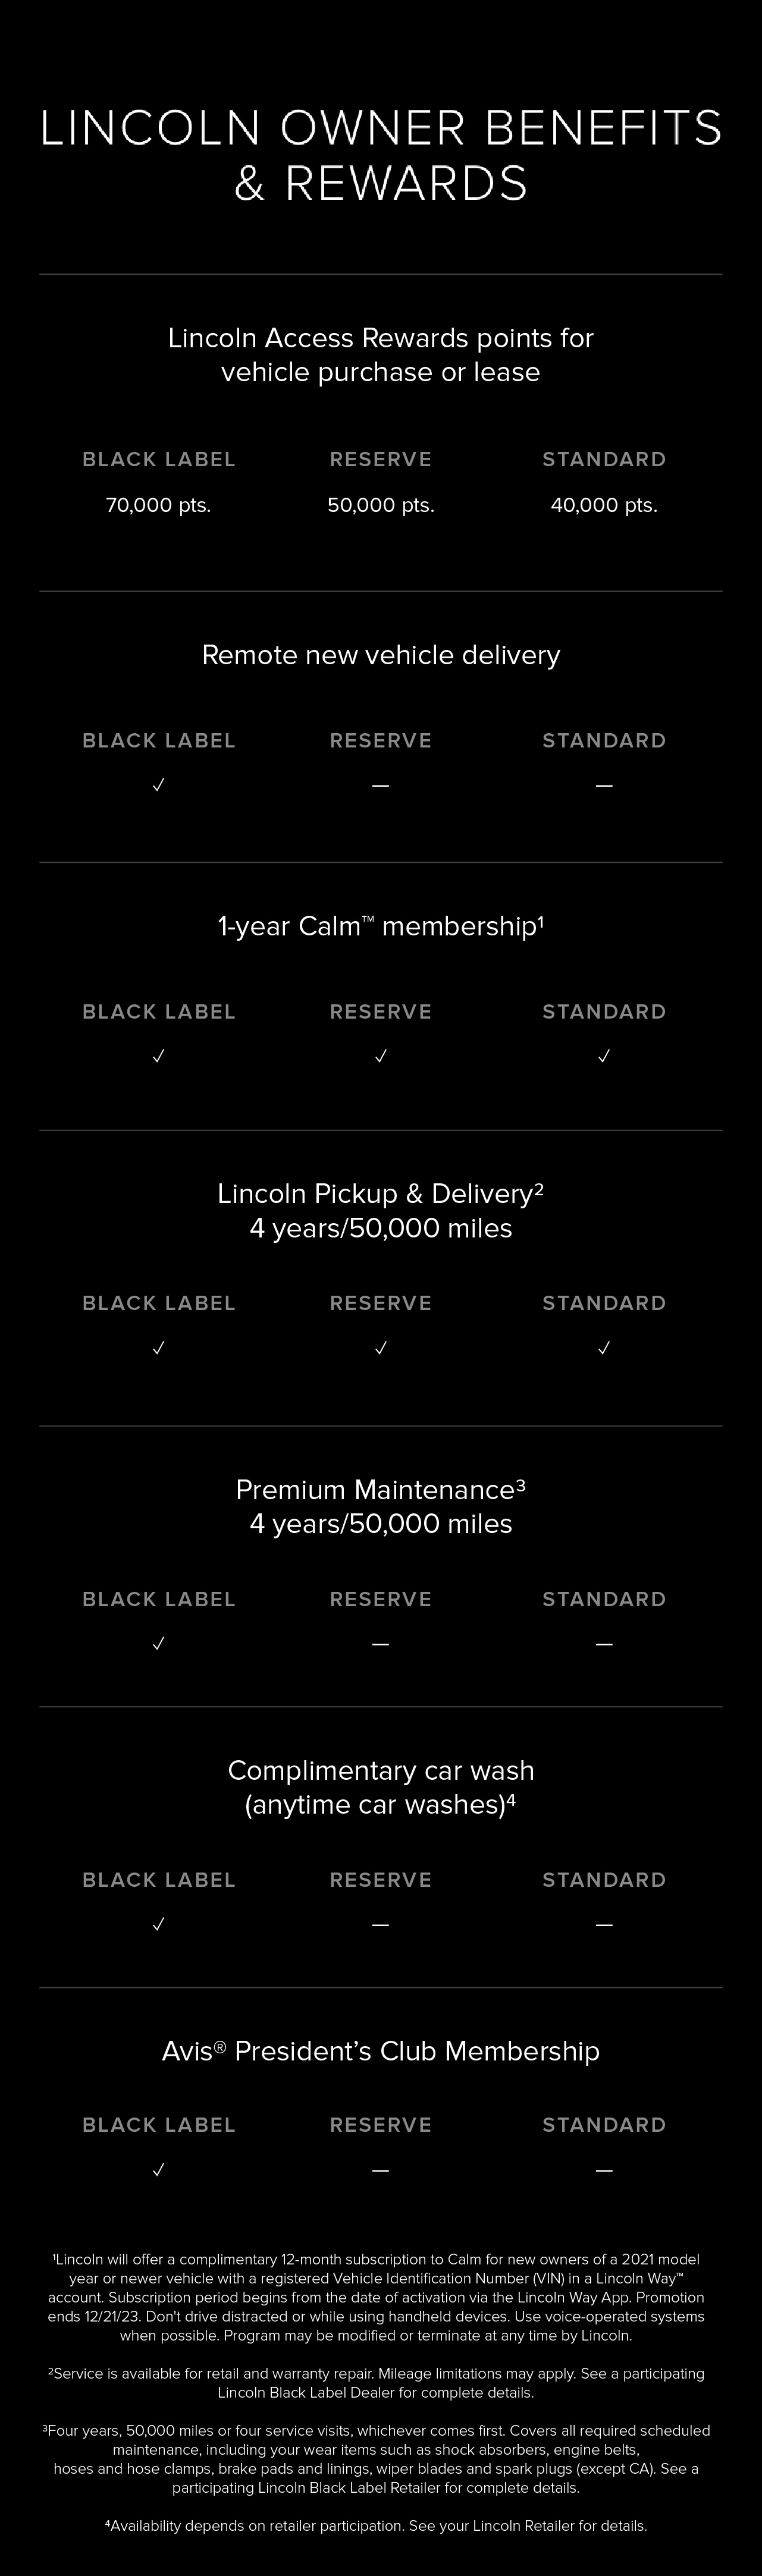 Lincoln Black Label owner benefits comparison chart